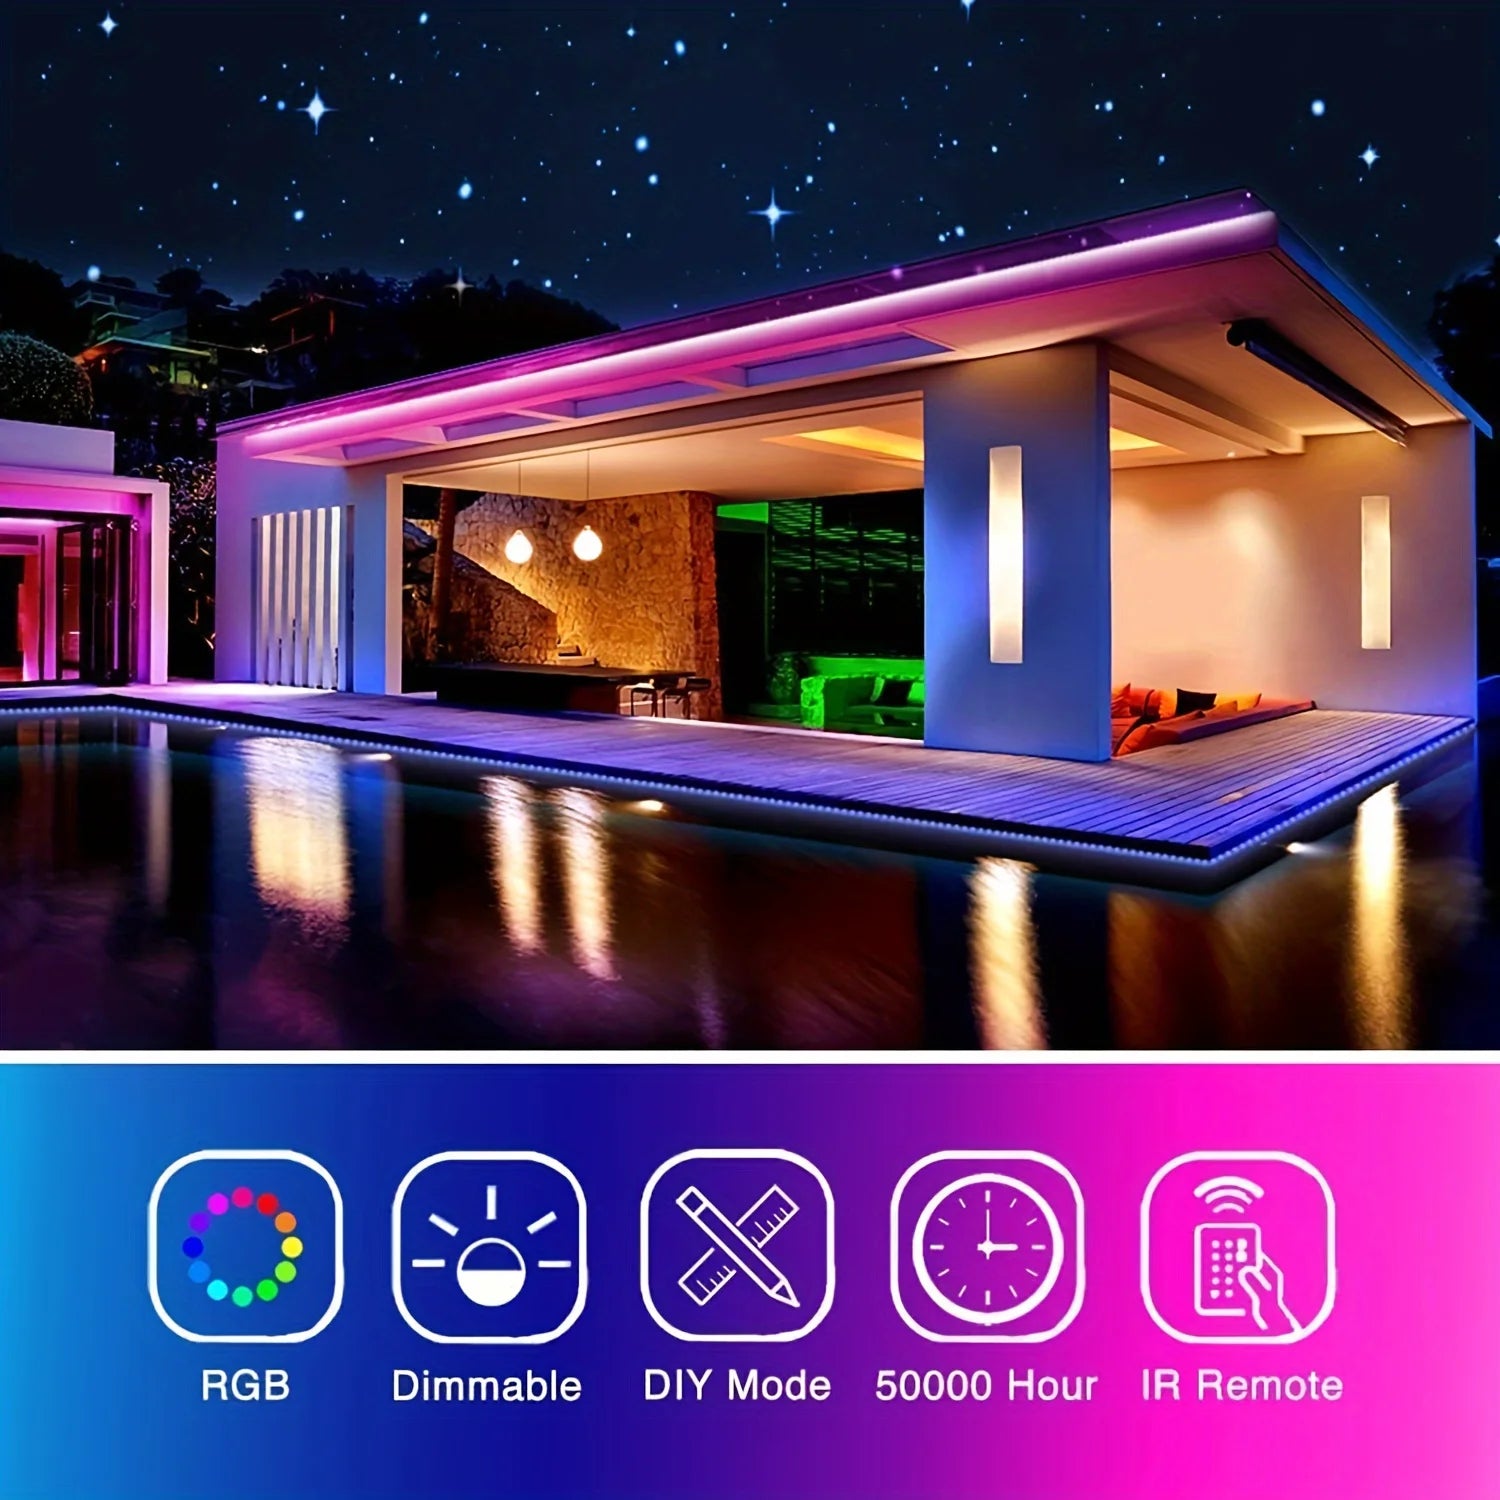 100FT LED Strip Lights for Bedroom,Usb Color Changing LED Light Strips with 44-Key Remote Control,Light Strips for Home Decor